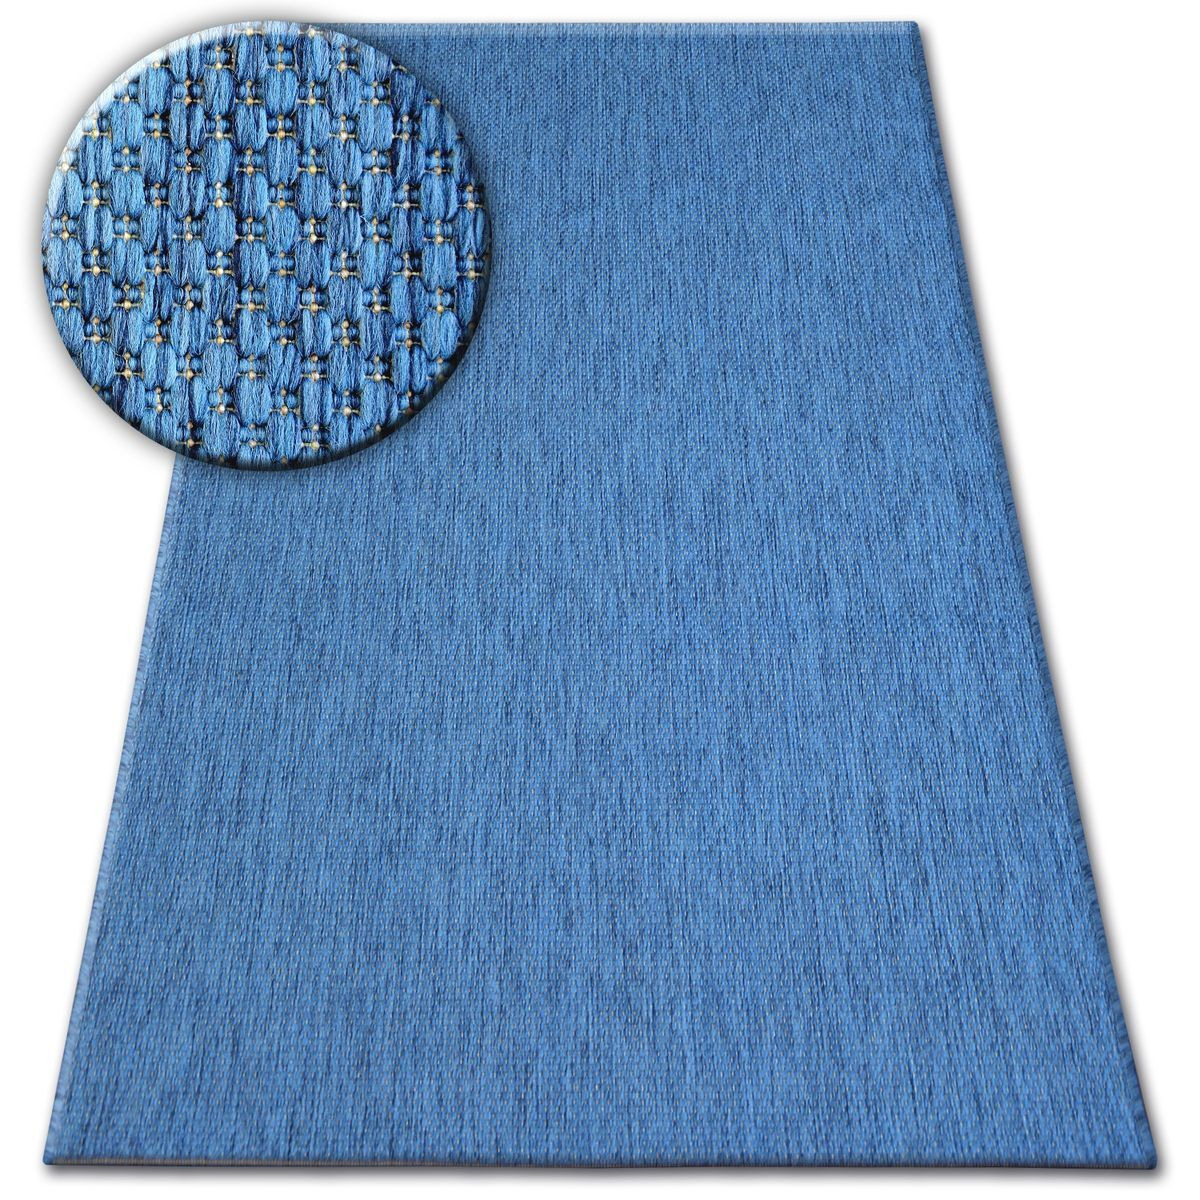 Cika Single Coloured Rug Blue, 140x200 cm - image 1